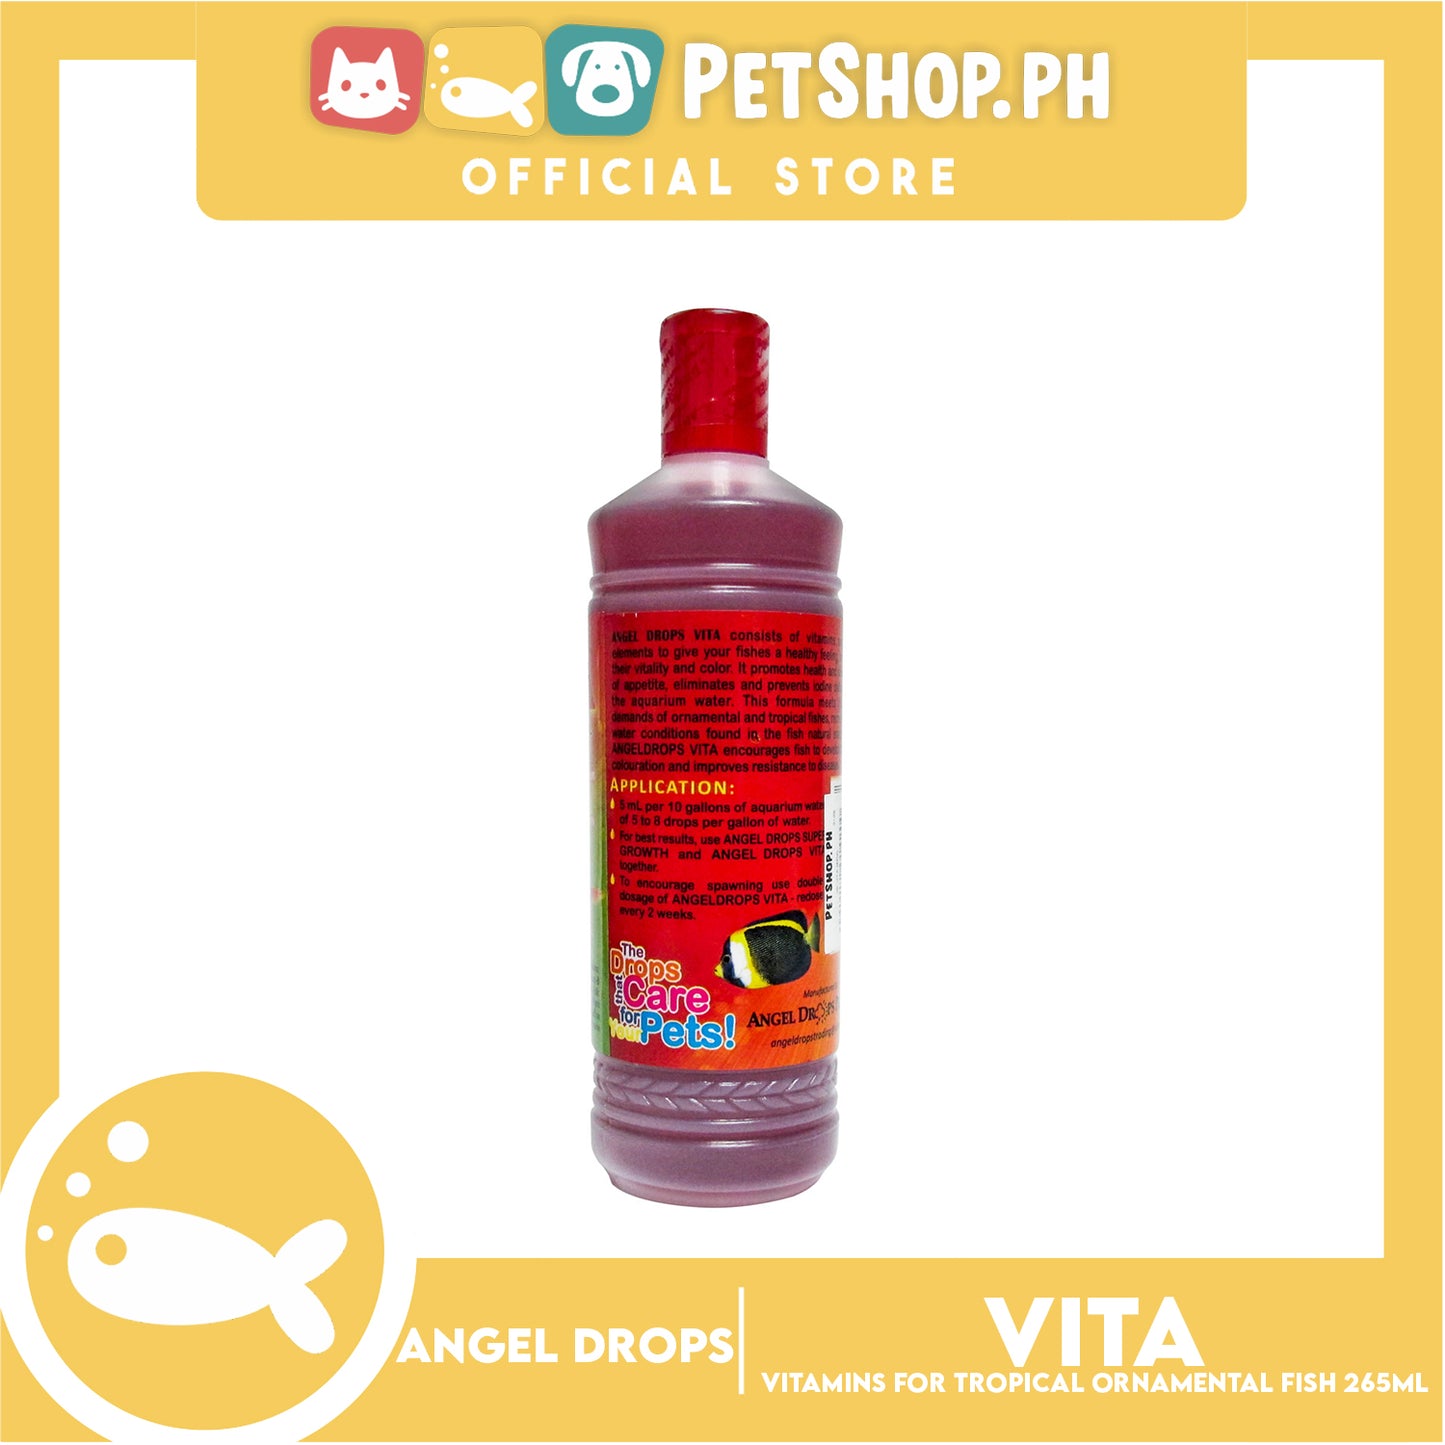 Angel Drops Vita 265ml Vitamins for Tropical Ornamental Fish